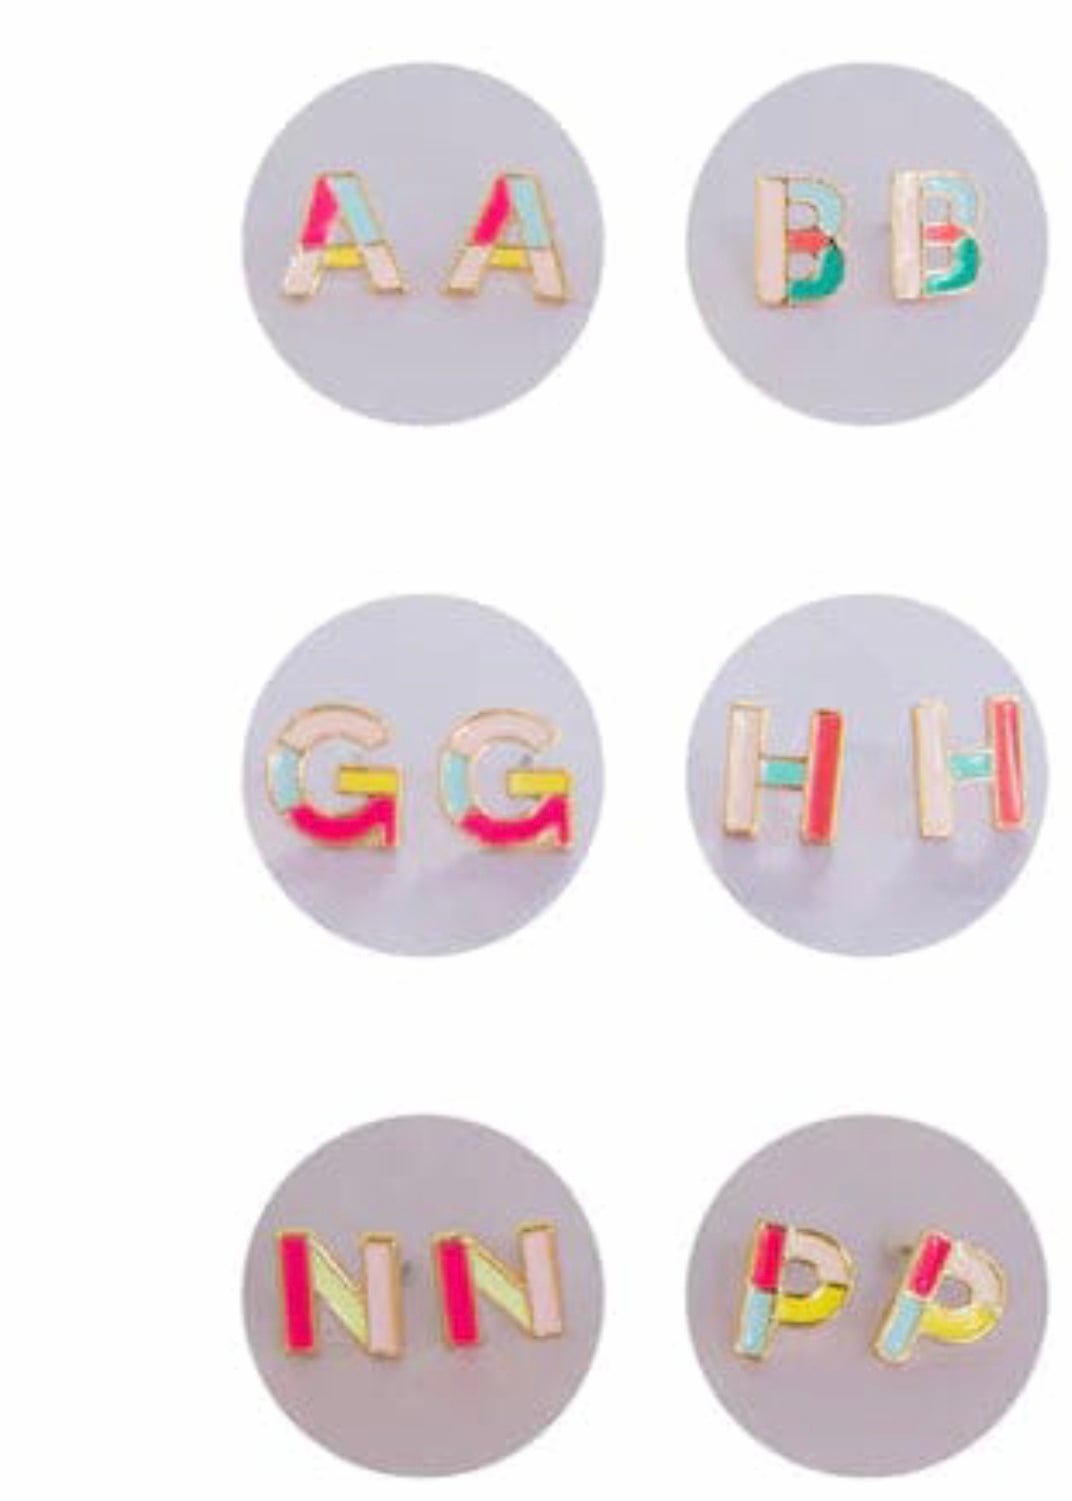 Olivia Luxe Initial Earrings Mattie B's Gifts & Apparel